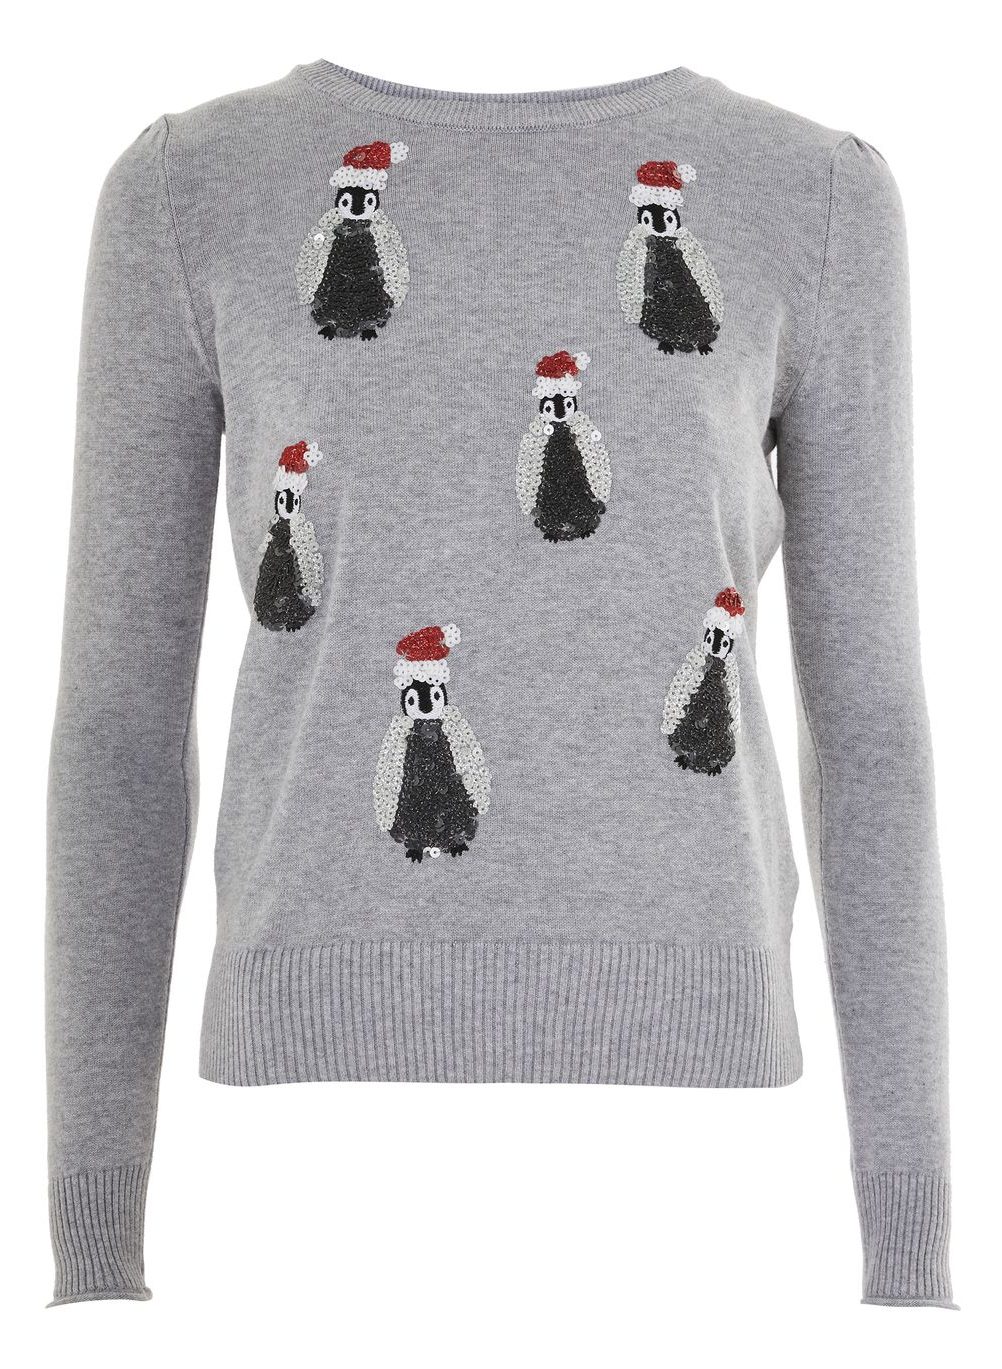 Red Funny Christmas Jumper Snow Robber Thief Snowman Nordic Sweatshirt